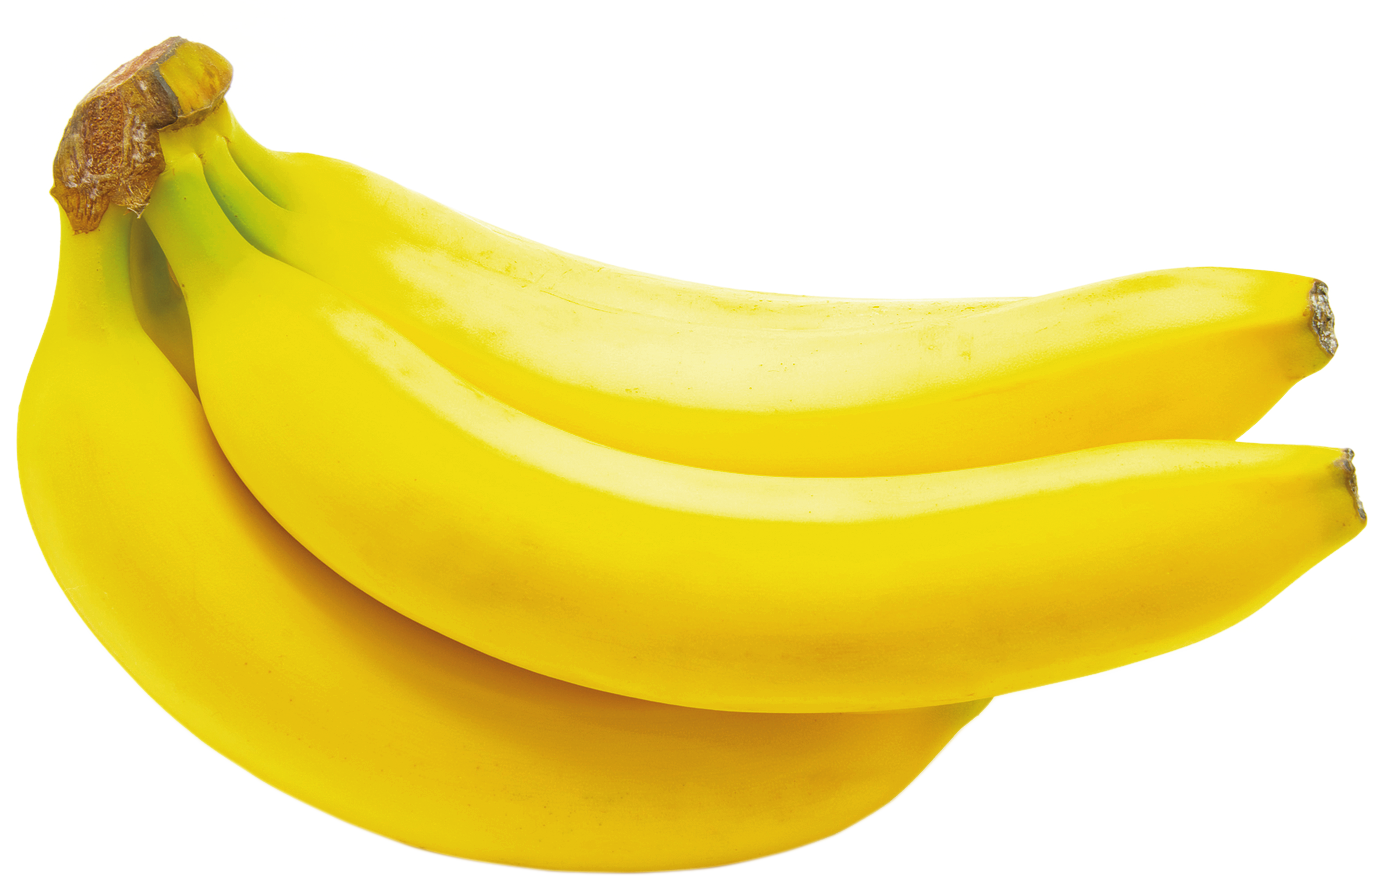 Banana's PNG Image - PurePNG | Free transparent CC0 PNG Image Library